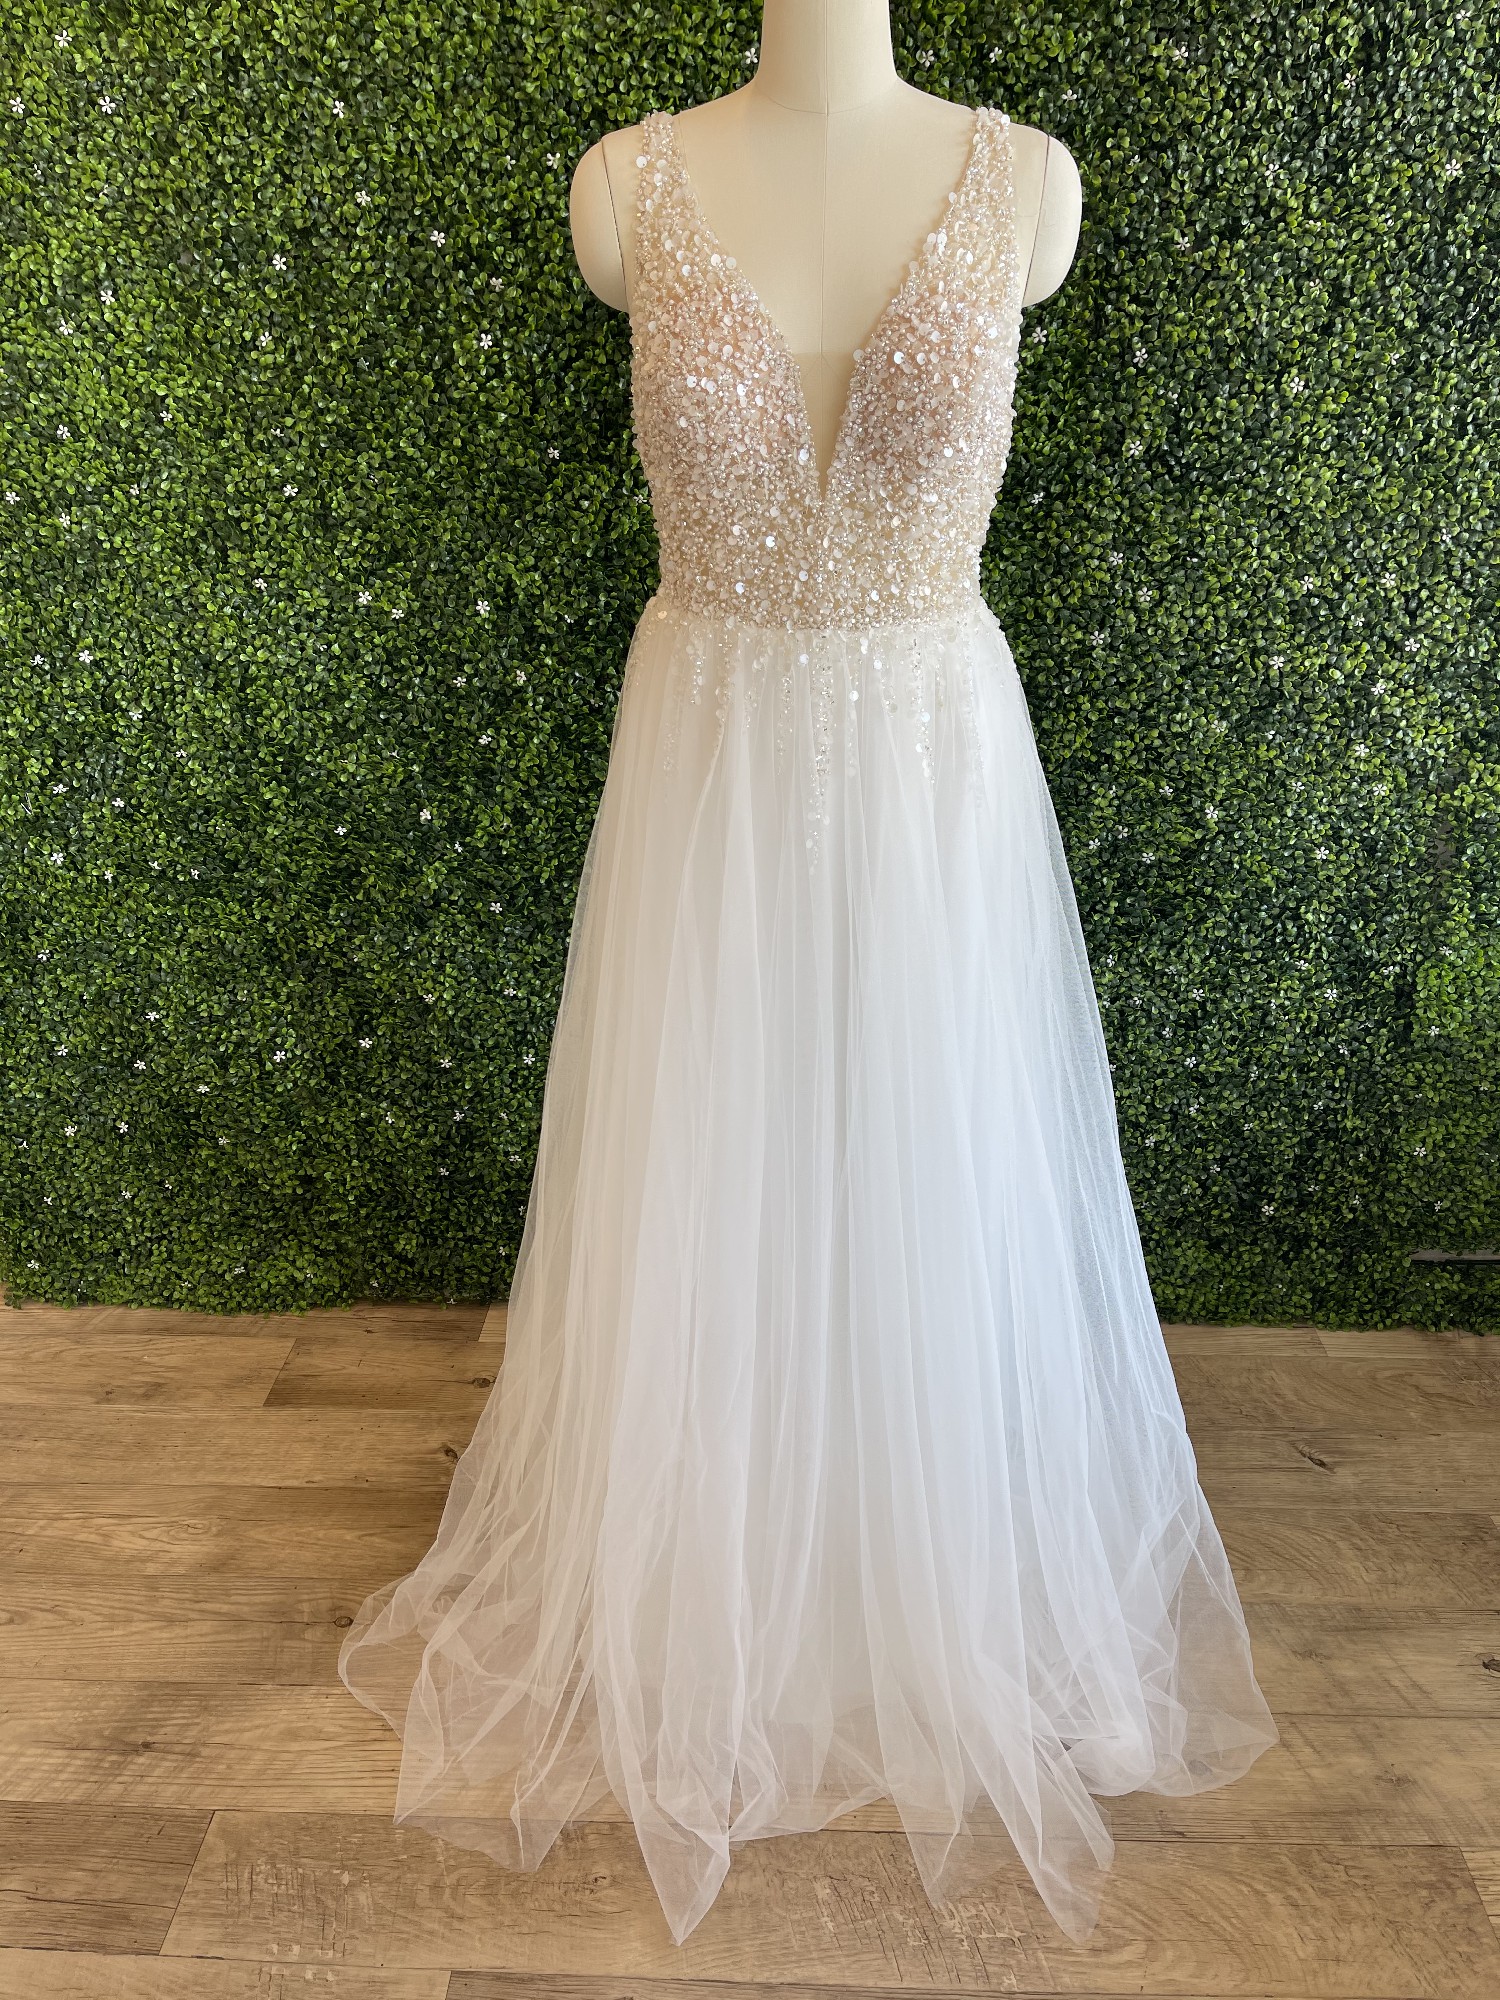 Stella York 7328 Sample Wedding Dress Save 38% - Stillwhite